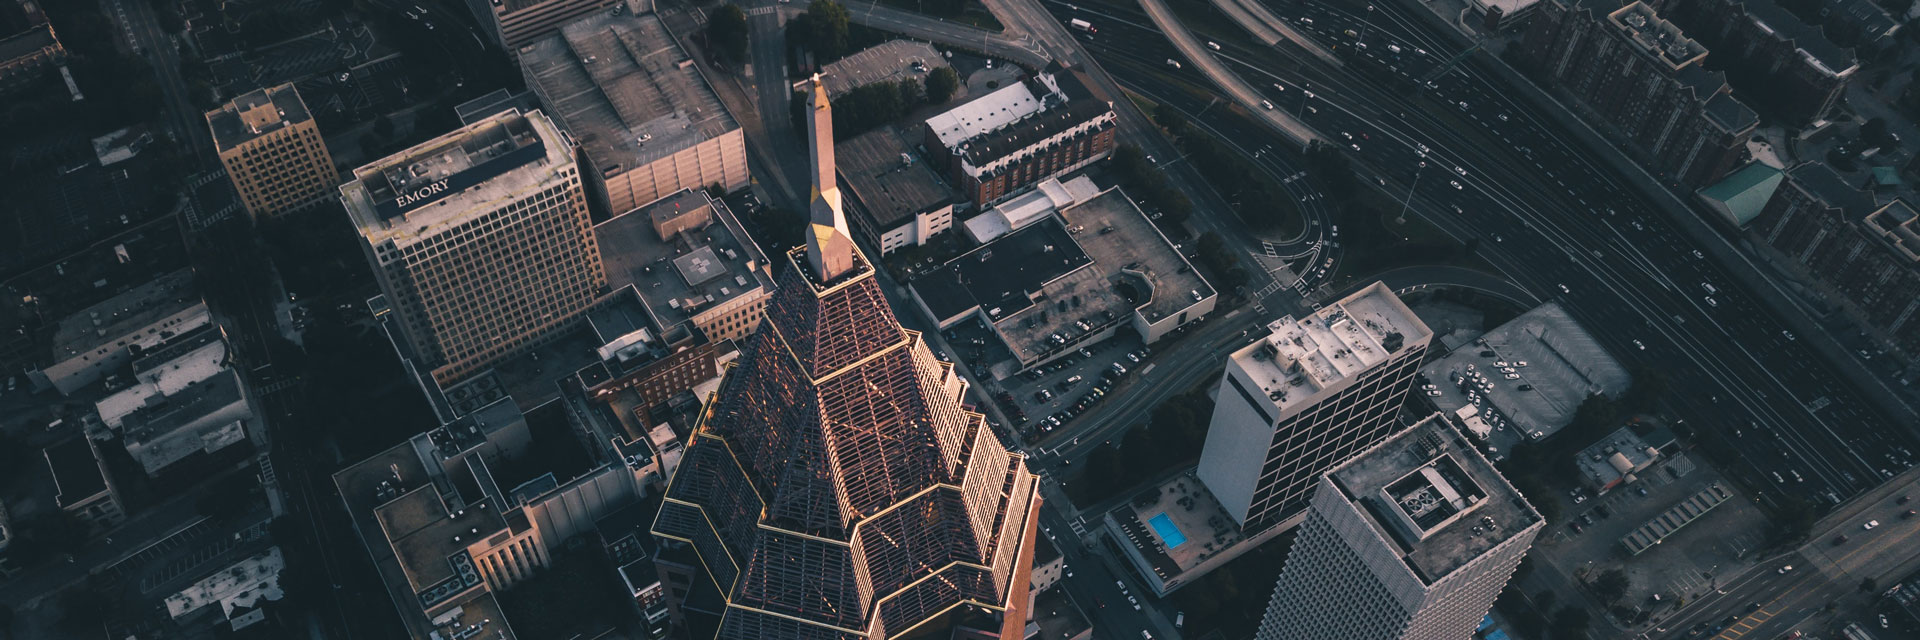 Aerial image of downtown Atlanta